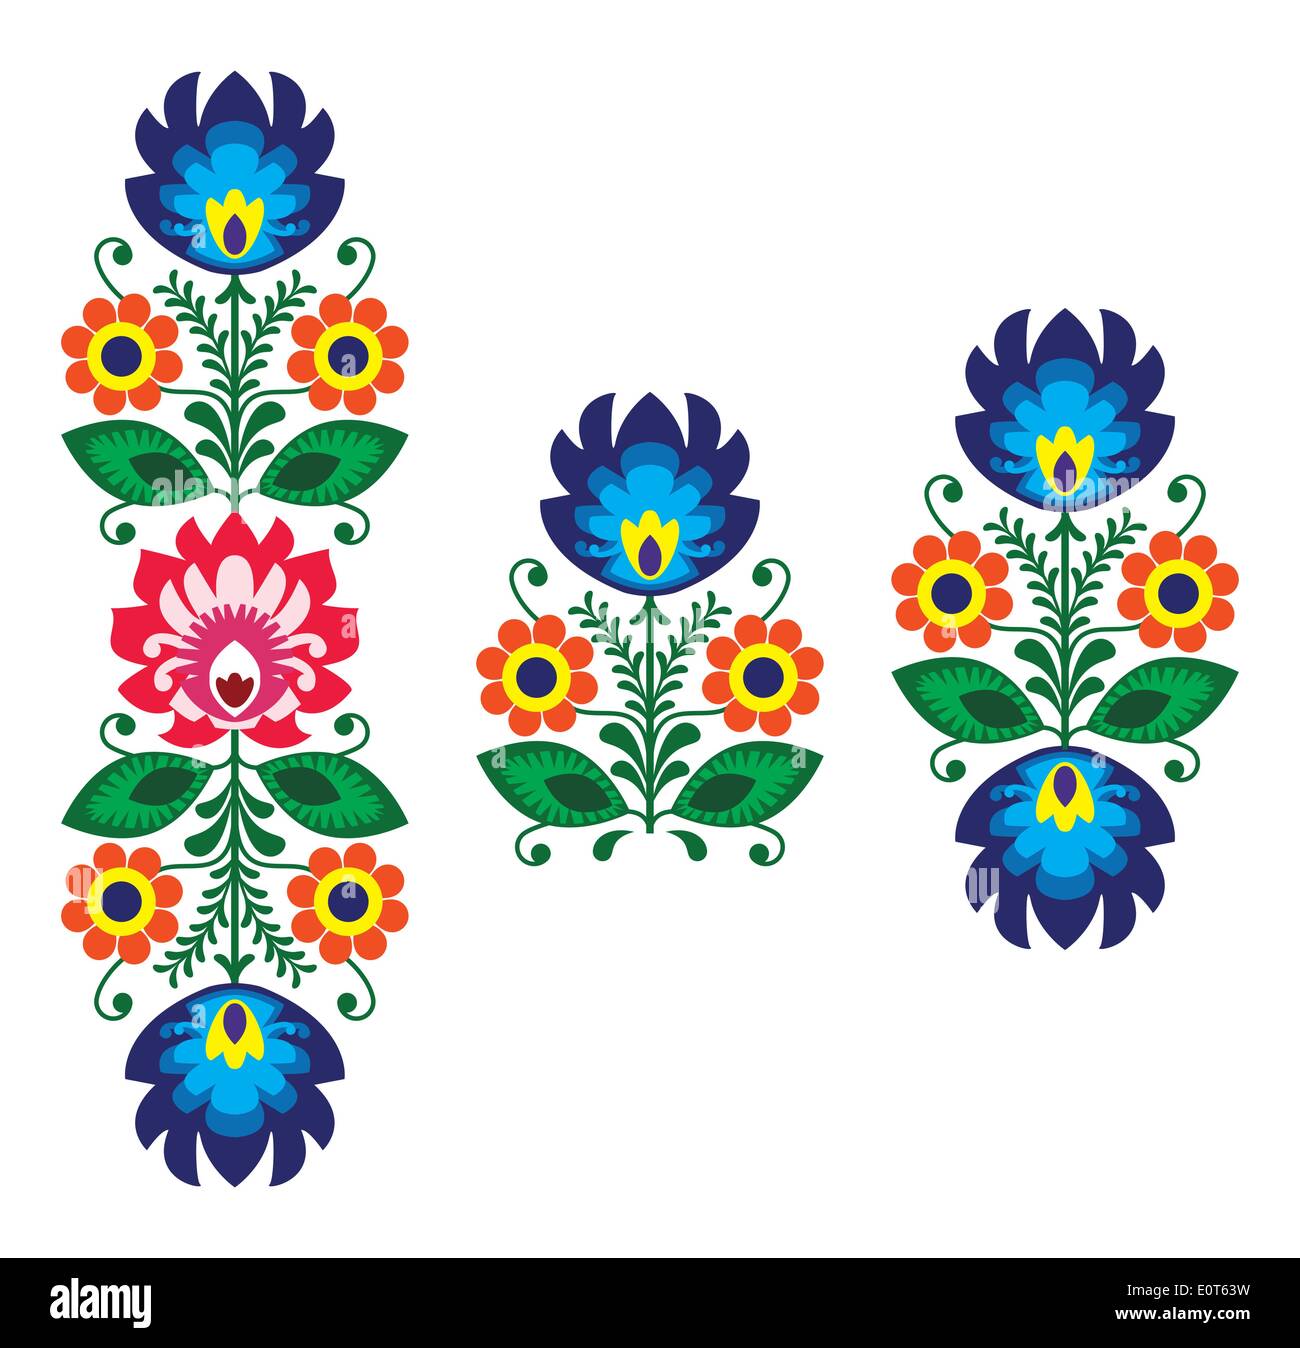 Polish folk art embroidery - traditional Polish pattern - wzory lowickie, wycinanki  Decorative Slavic traditional vector patters set - paper catouts Stock Vector